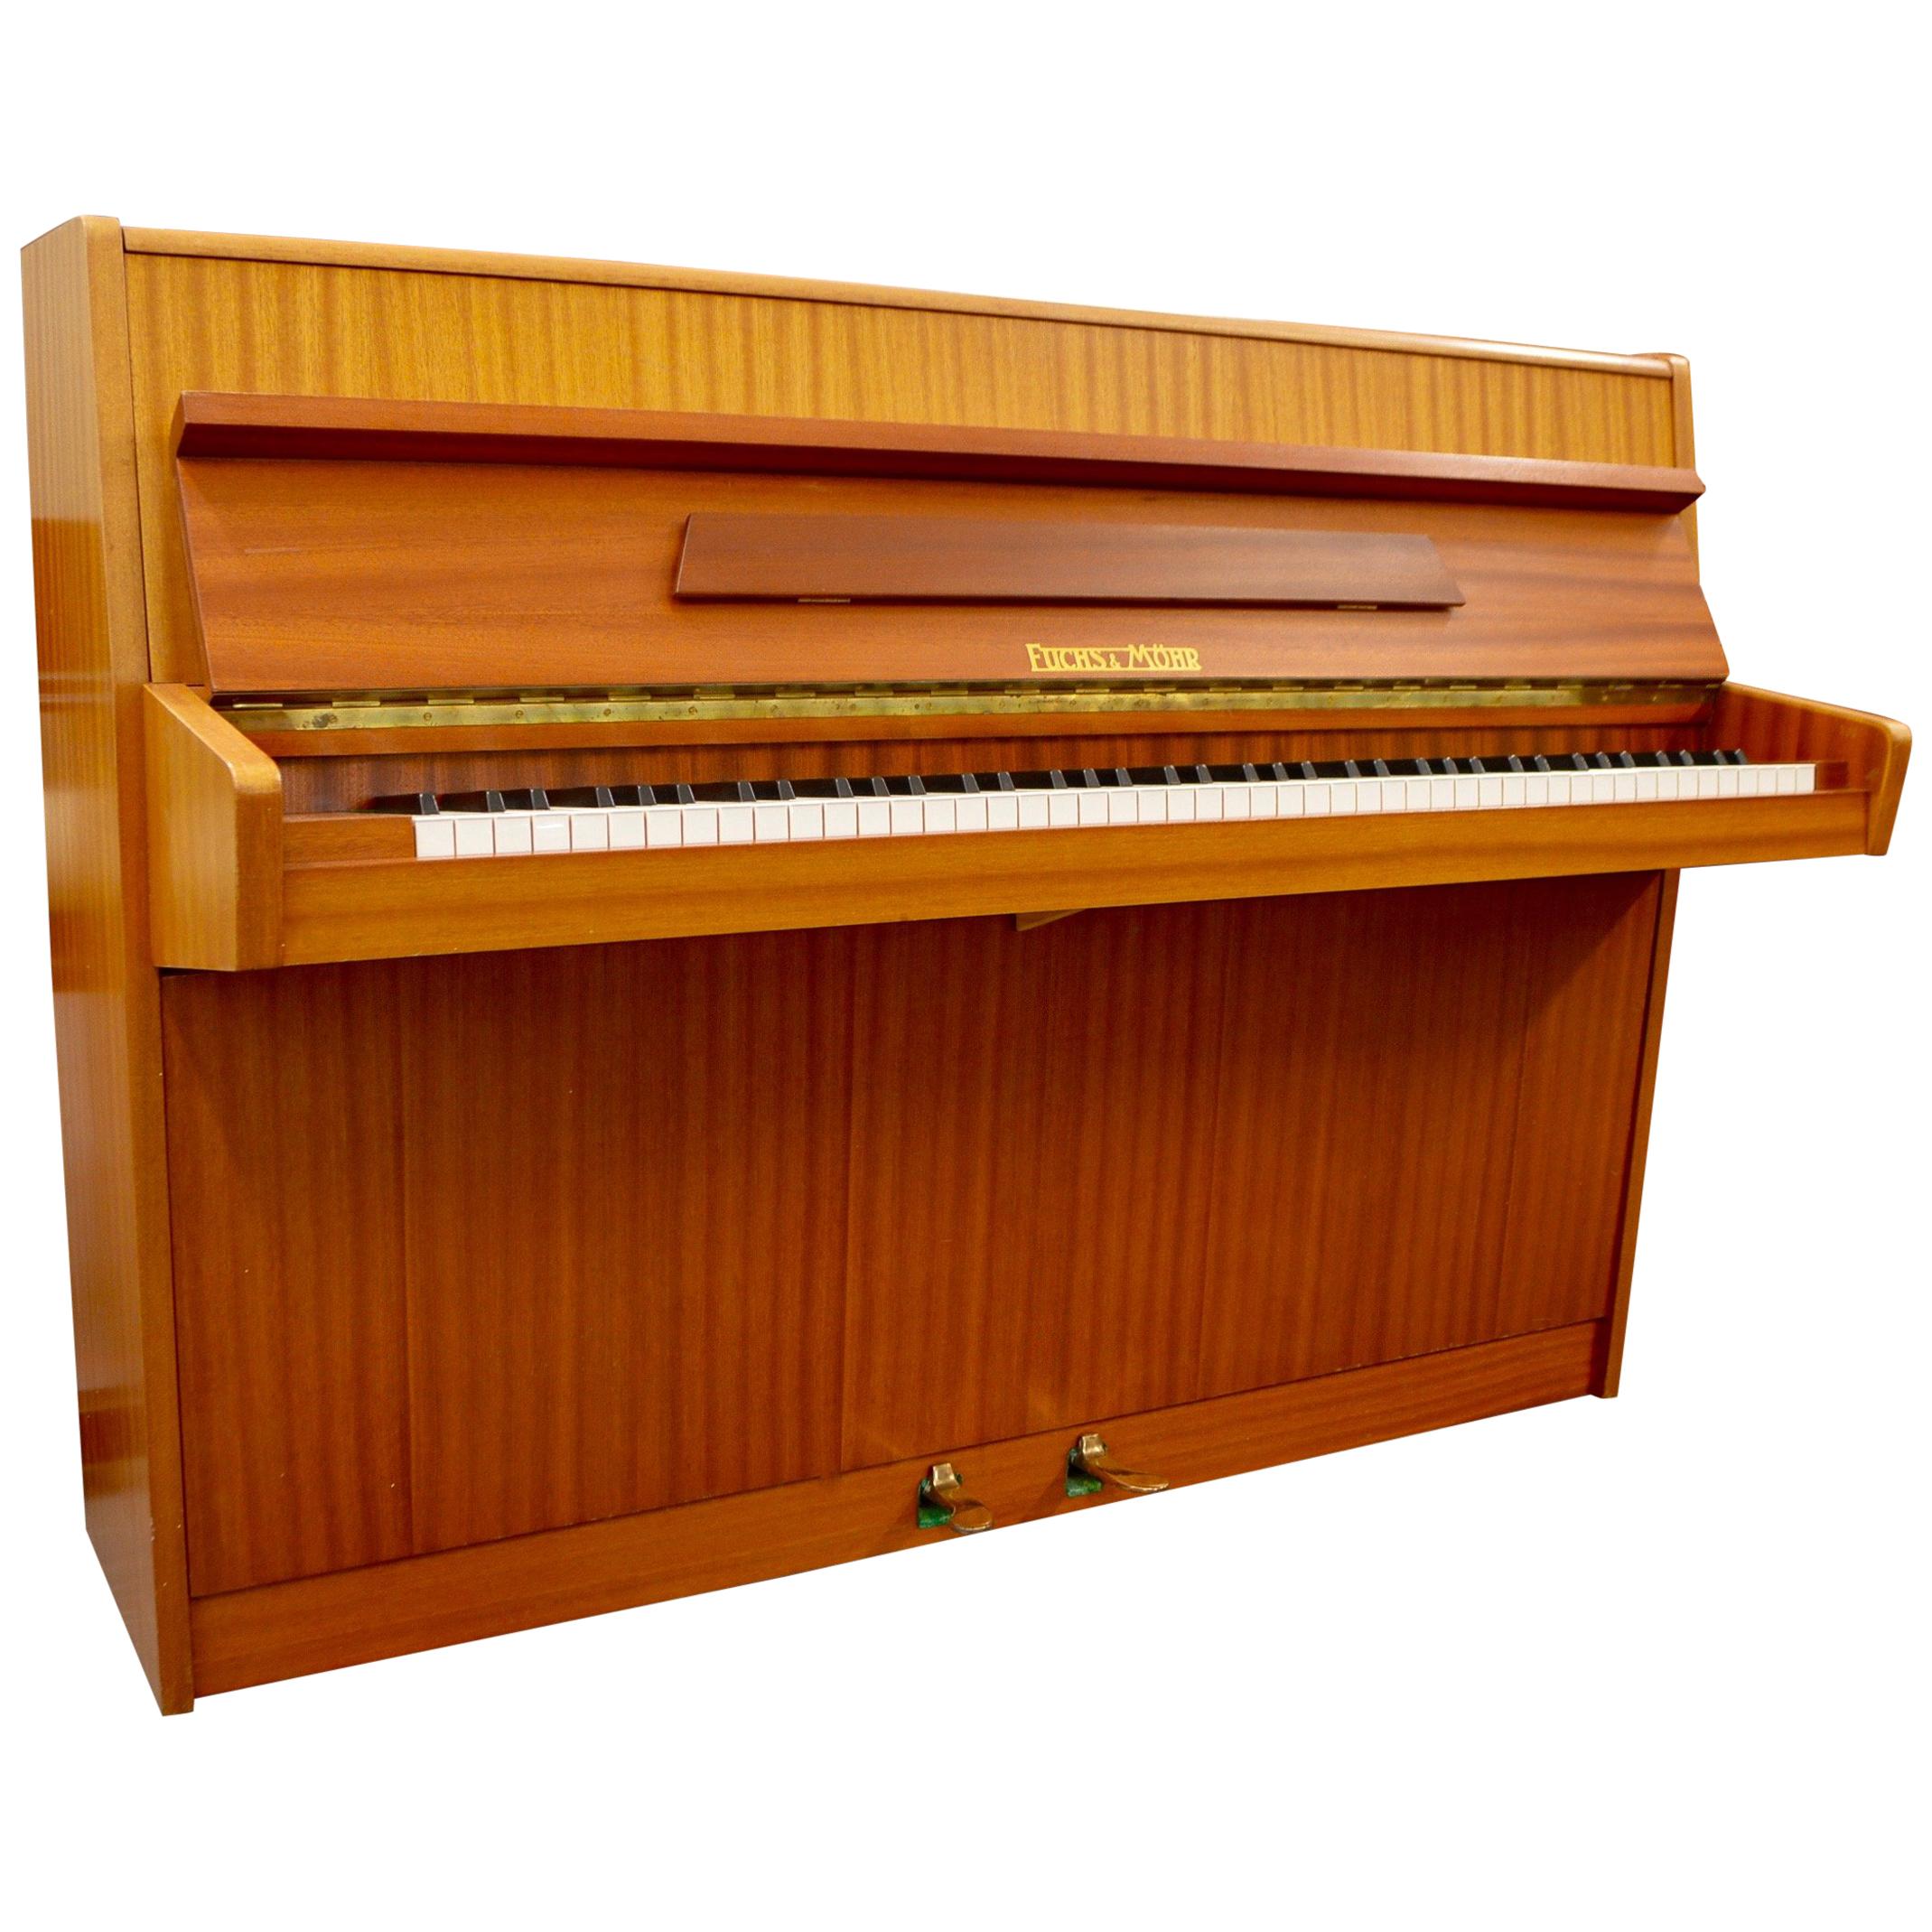 Fuchs & Mohr German Made Mid Centruy Piano in Mahogany For Sale